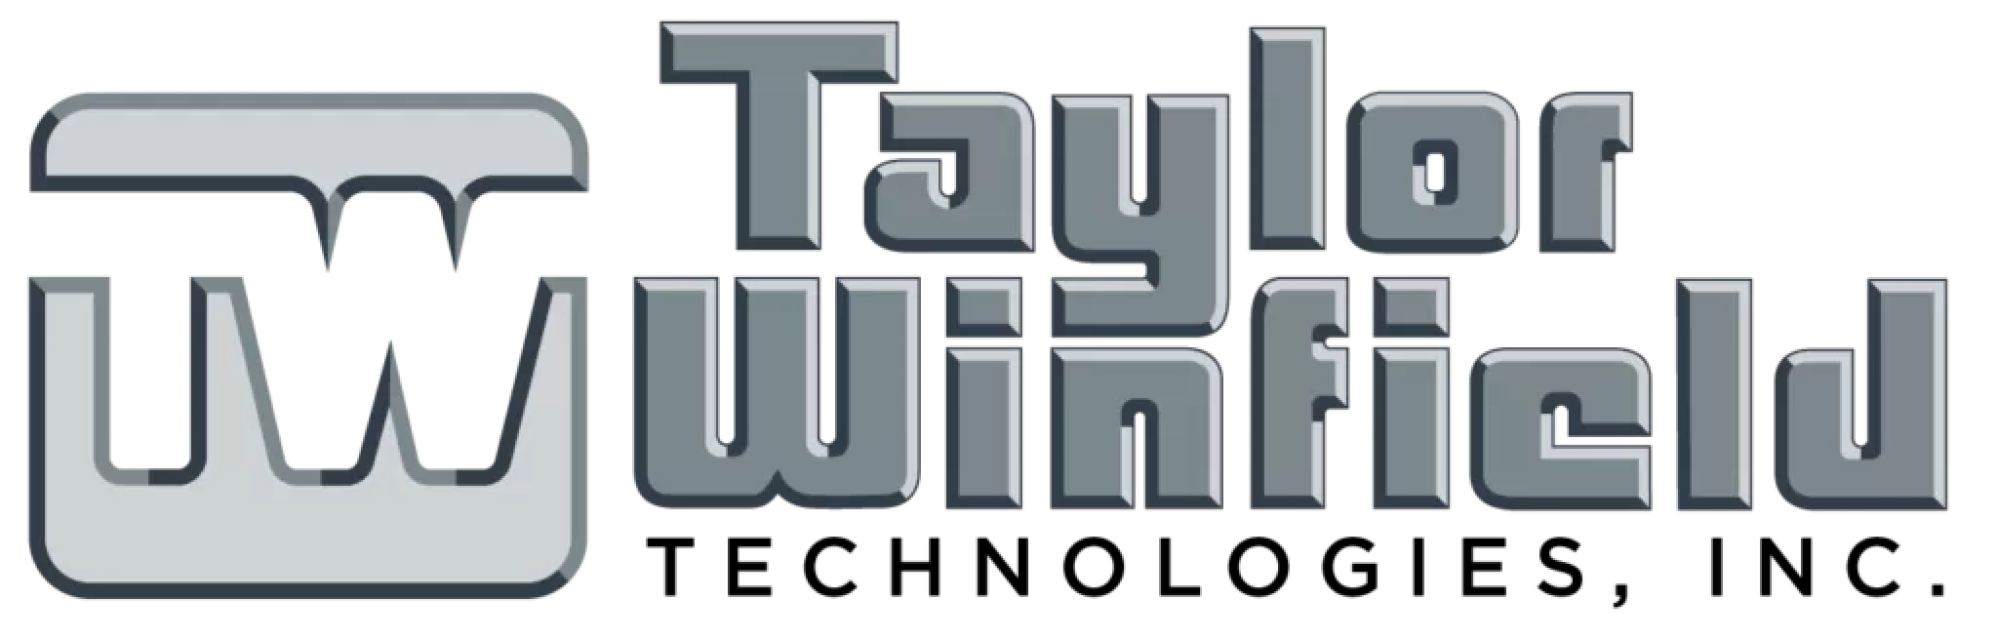 Taylor-Winfield Technologies